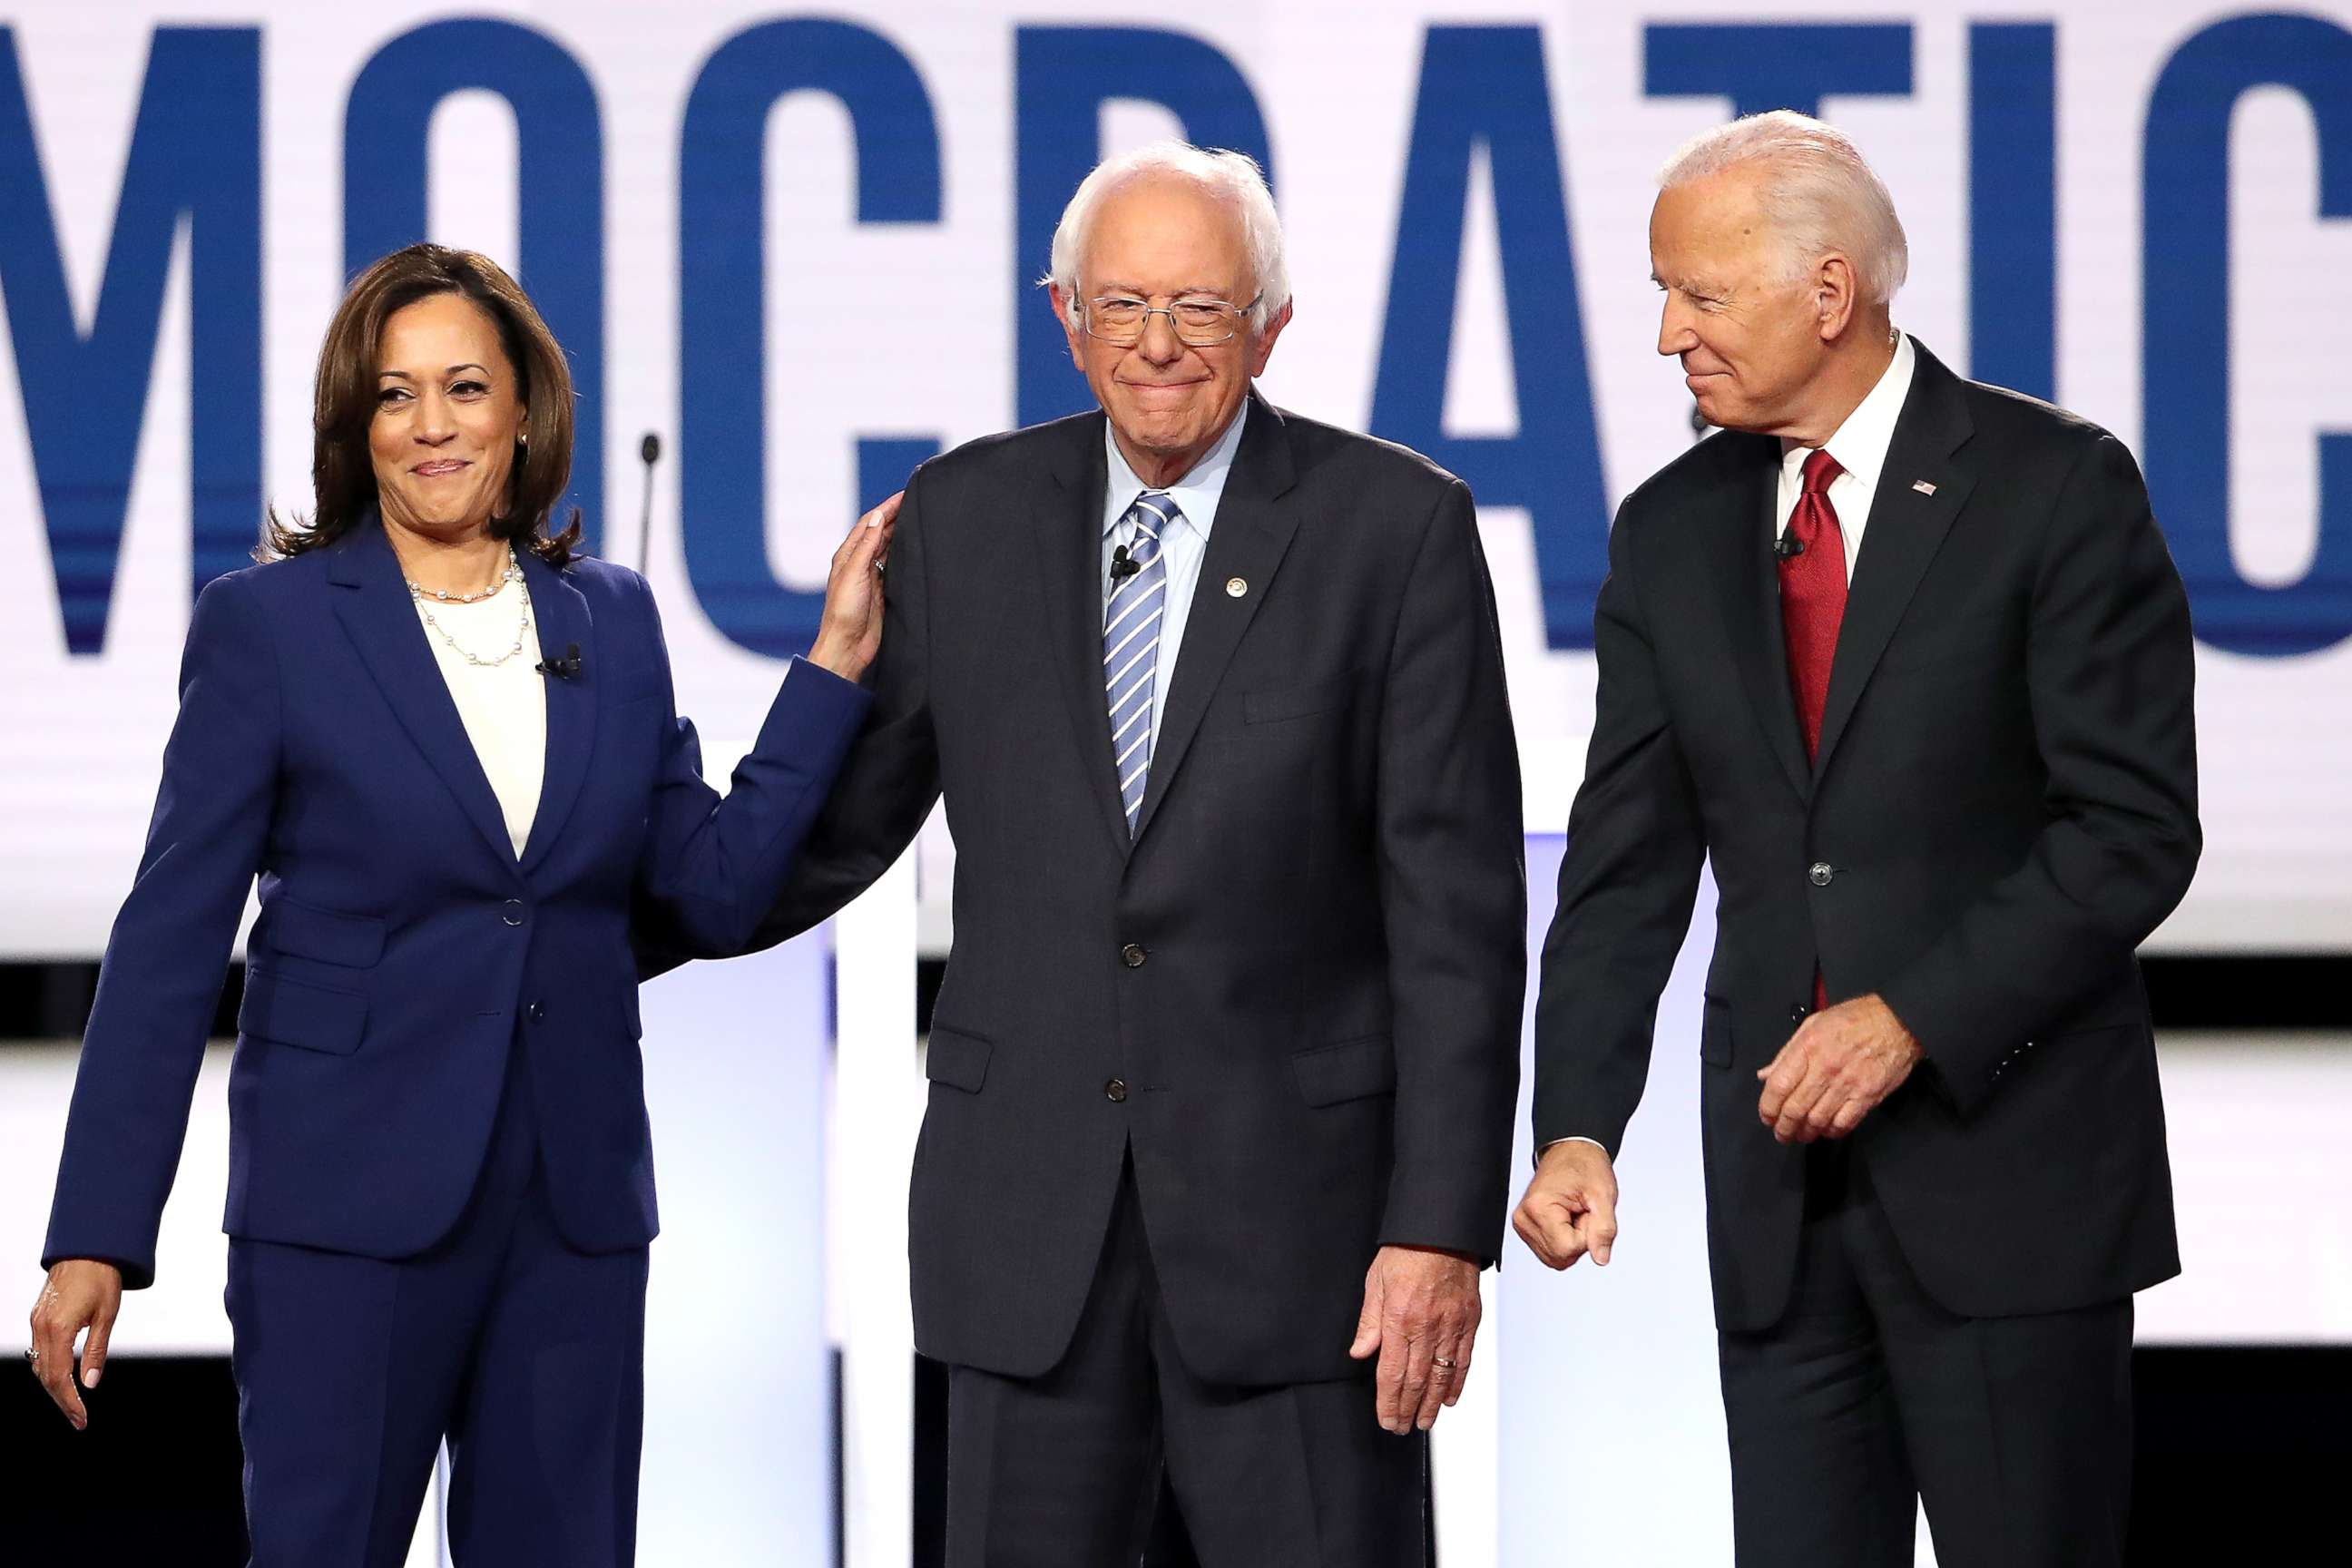 PHOTO: Sen. Kamala Harris, Sen. Bernie Sanders, and former Vice President Joe Biden enter the stage before the Democratic Presidential Debate at Otterbein University on October 15, 2019 in Westerville, Ohio.